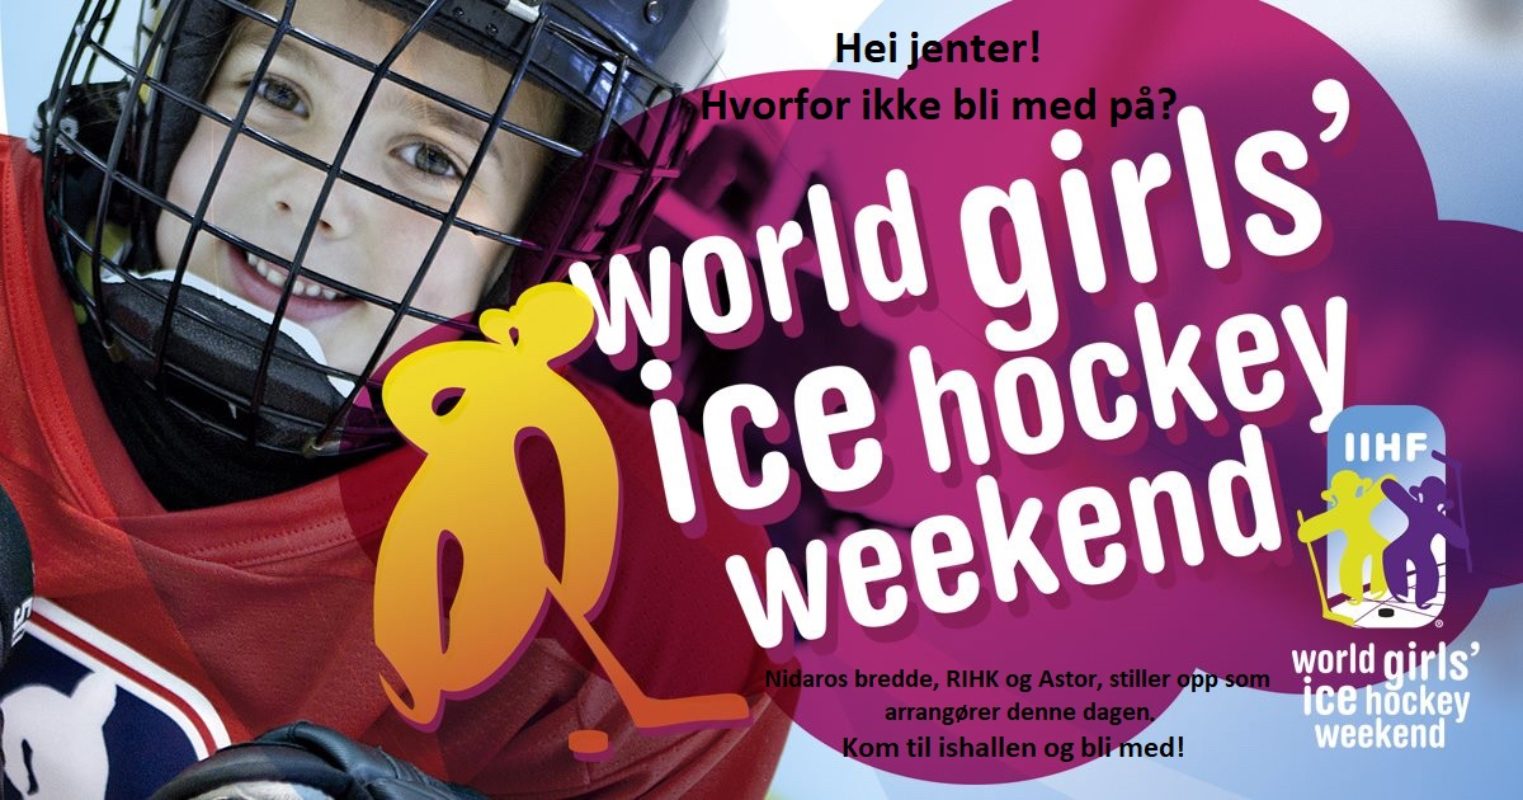 May be an image of 1 person, playing hockey, hockey stick, poster and text that says "Hei jenter! Hvorfor ikke bli world girls med weekend world girls' hockey IIHF RIHKog ice hockey weekend"